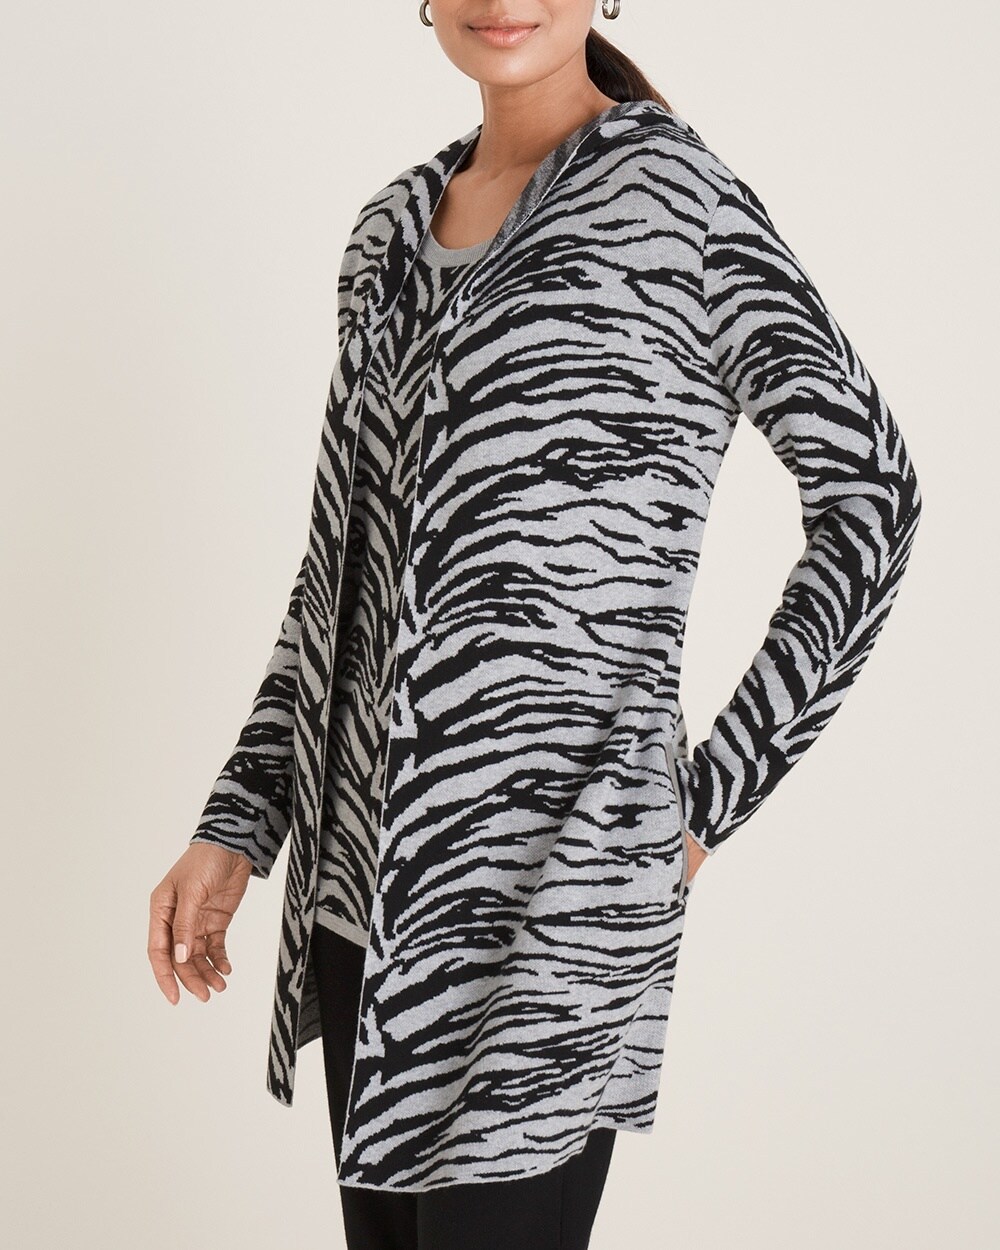 Zenergy Tiger-Print Cotton-Cashmere Blend Jacquard Cardigan